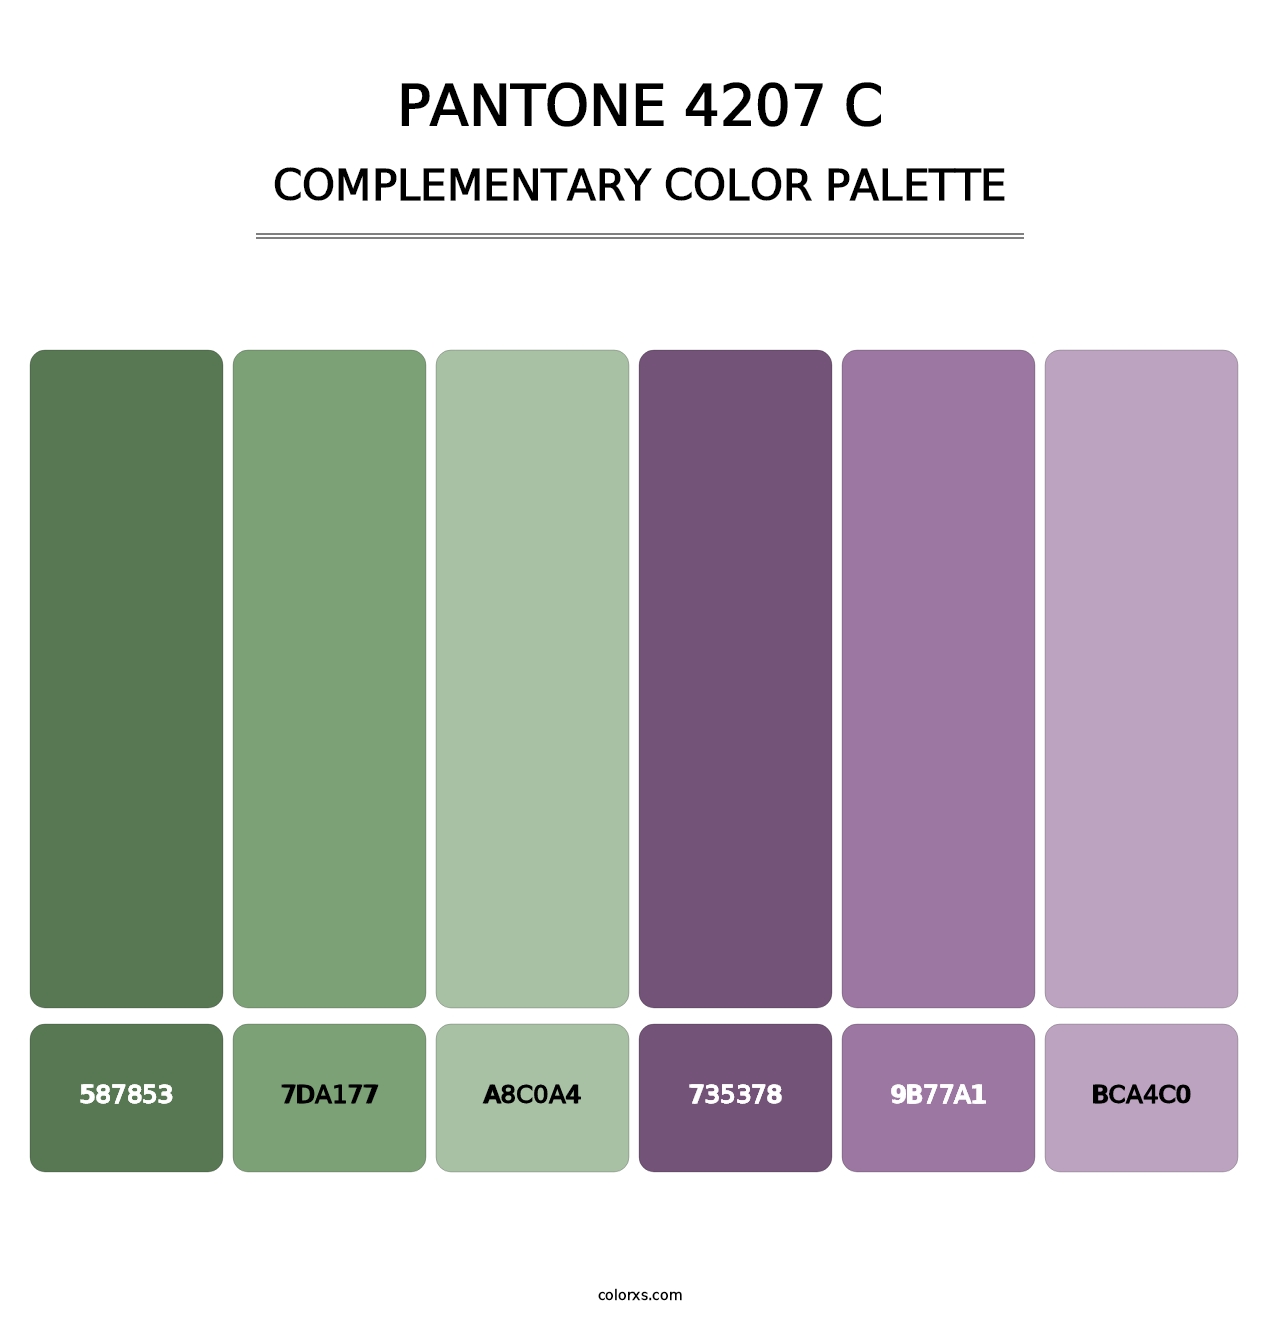 PANTONE 4207 C - Complementary Color Palette